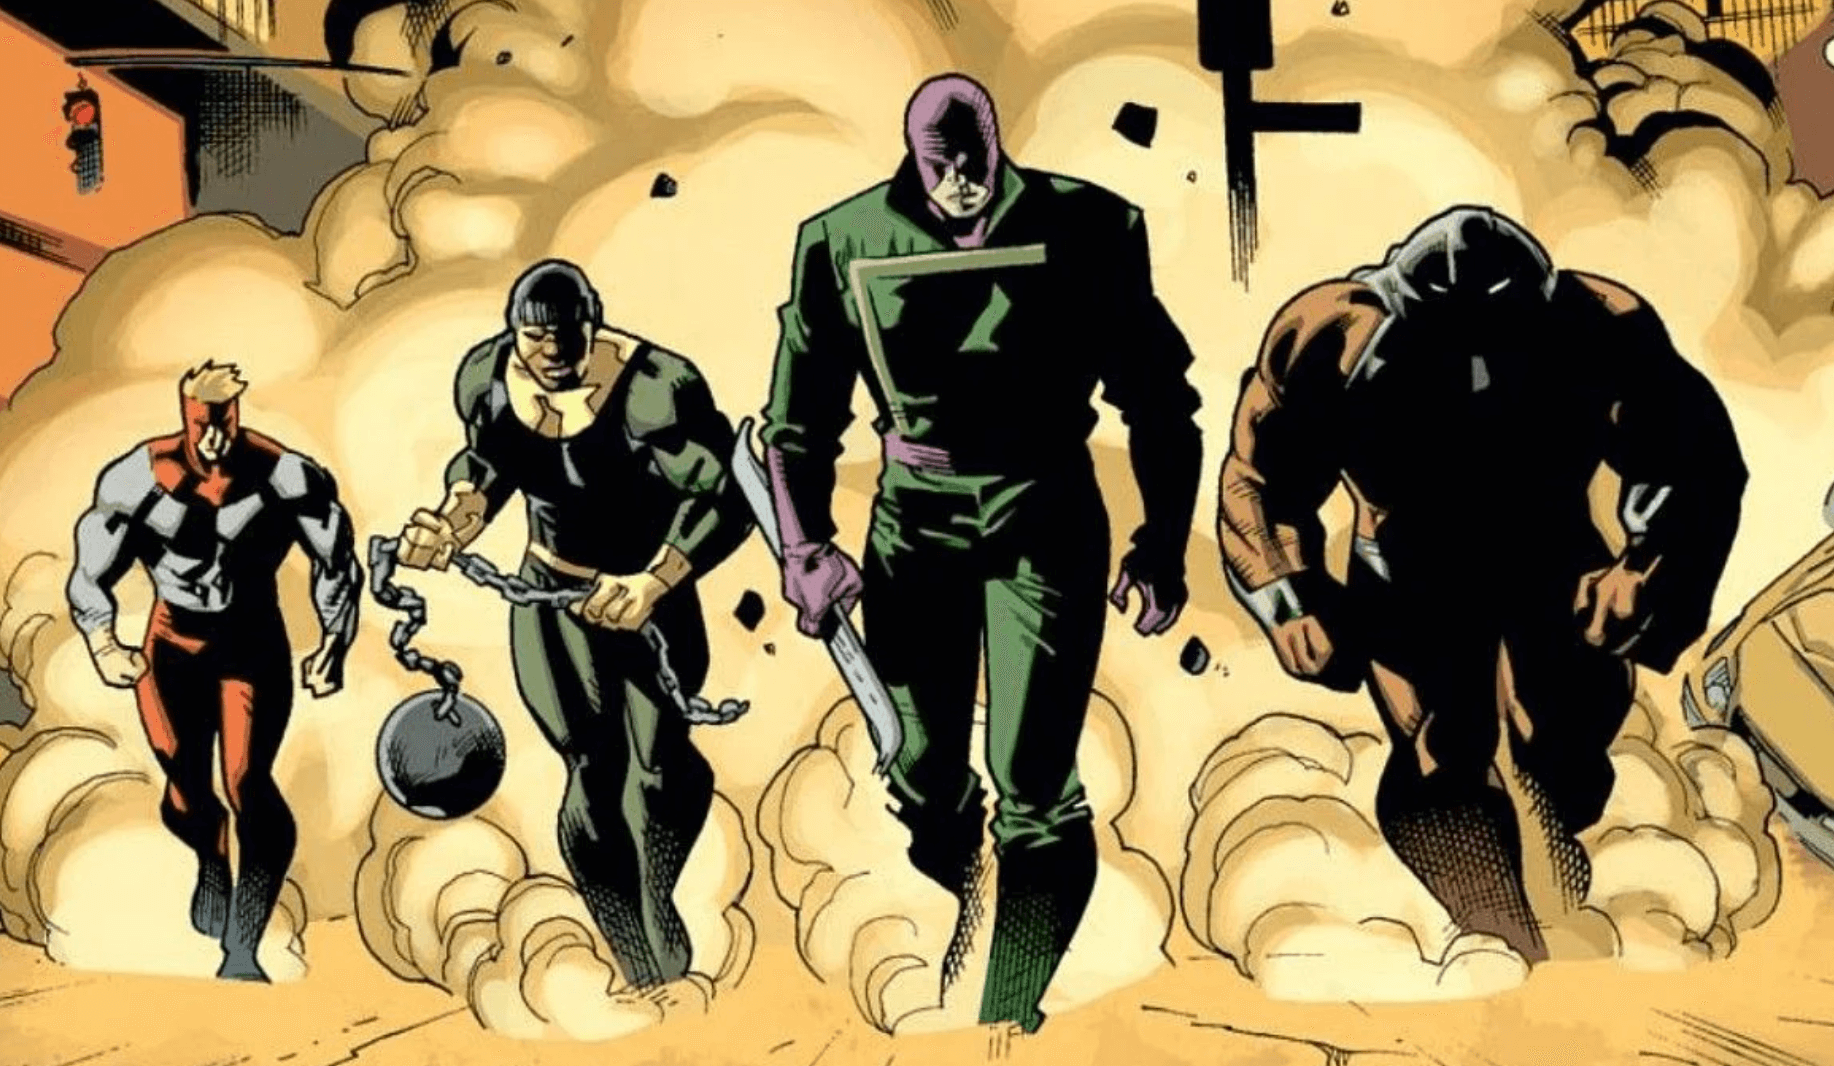 The Wrecking Crew Rumored To Make Their MCU Debut In ‘She-Hulk’